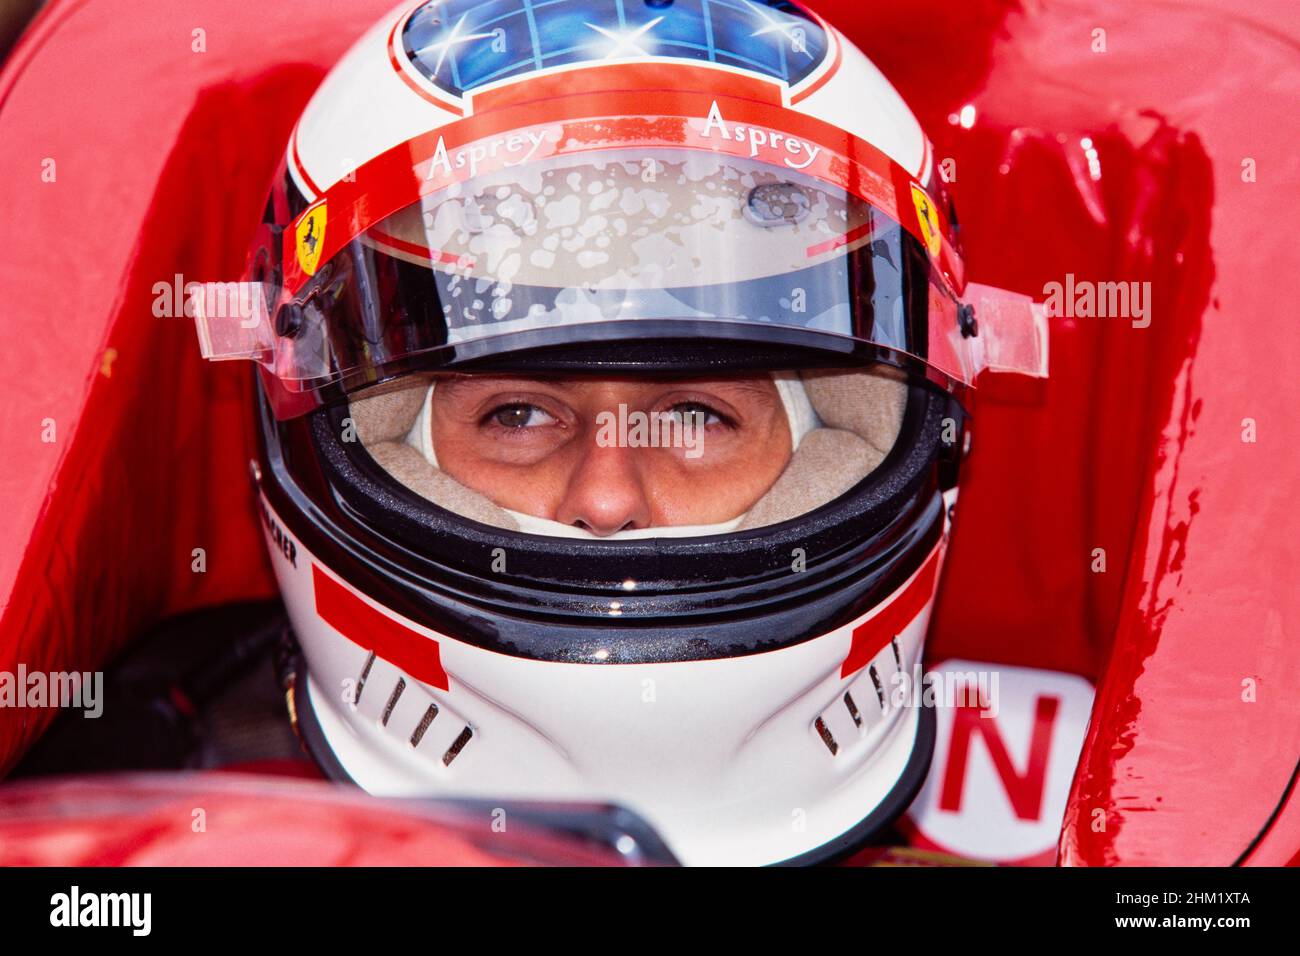 Campeón del Mundo Michael Schumacher, Fórmula 1, Gran Premio de Alemania en Hockenheimring el 28 de julio de 1996, Equipo Scuderia Ferrari, coche Ferrari F310 Foto de stock